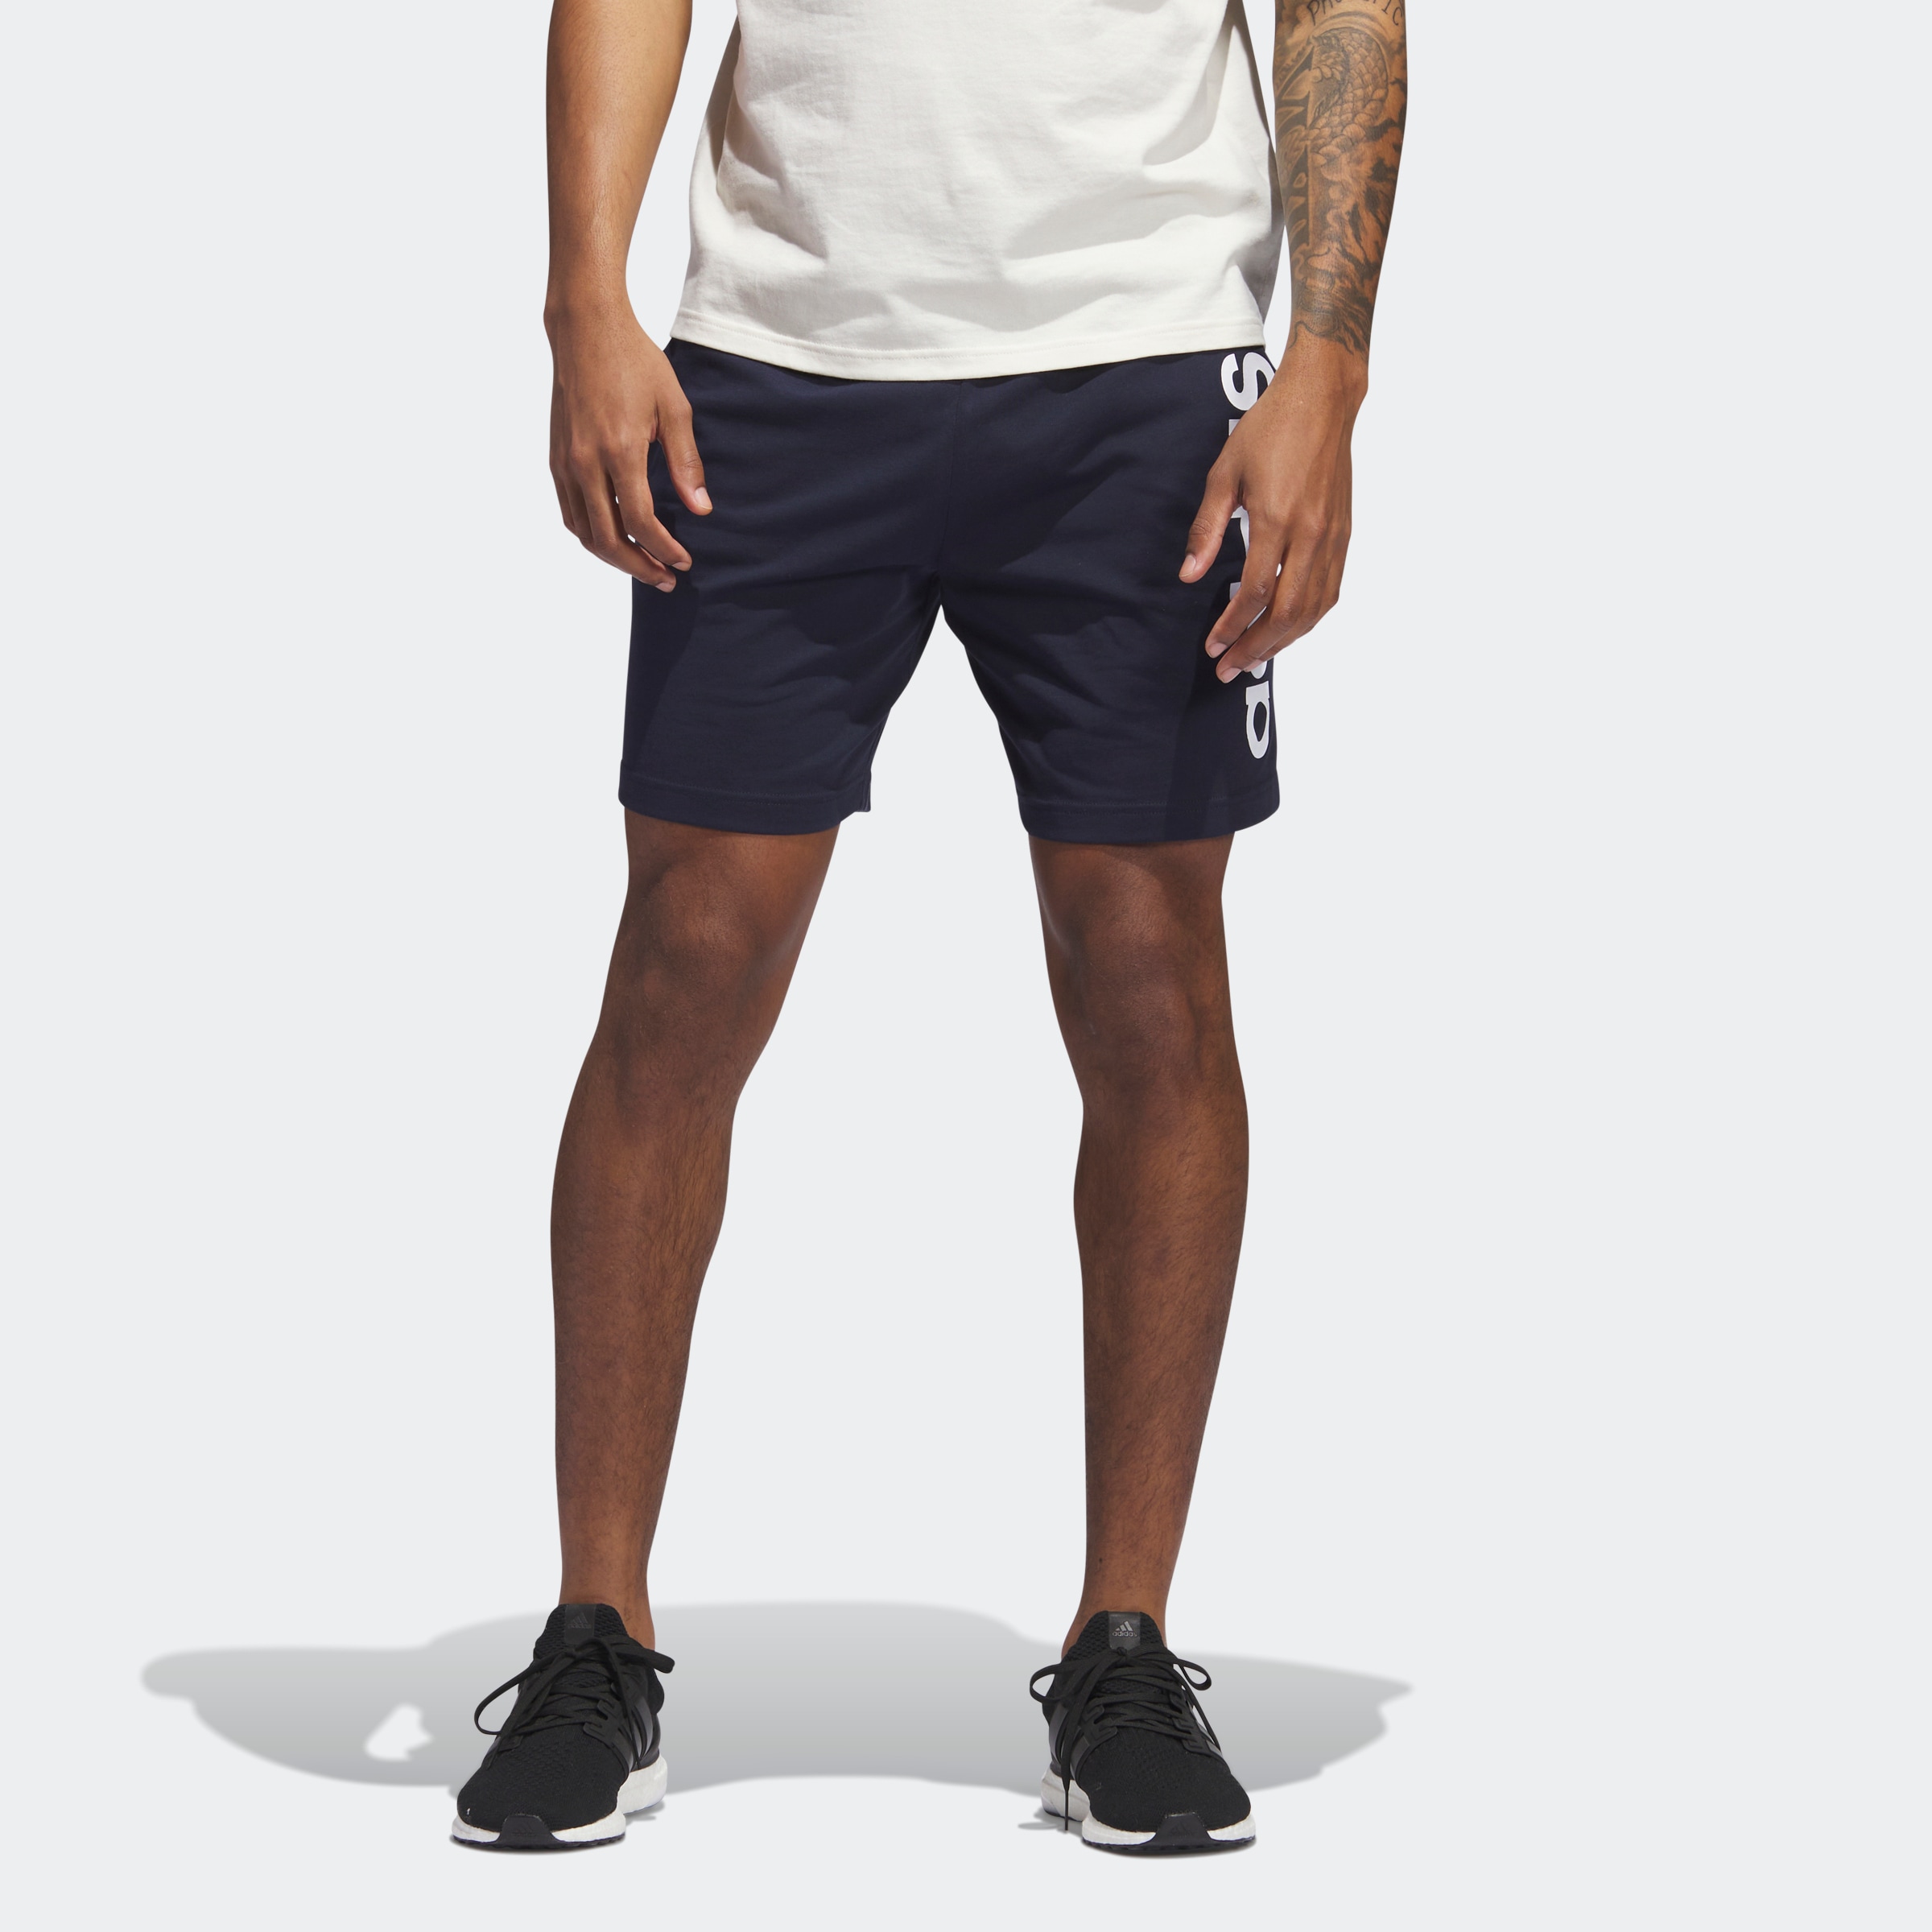 LOGO«, tlg.) JERSEY »AEROREADY OTTO Shorts ESSENTIALS Sportswear bestellen online bei adidas (1 LINEAR SINGLE